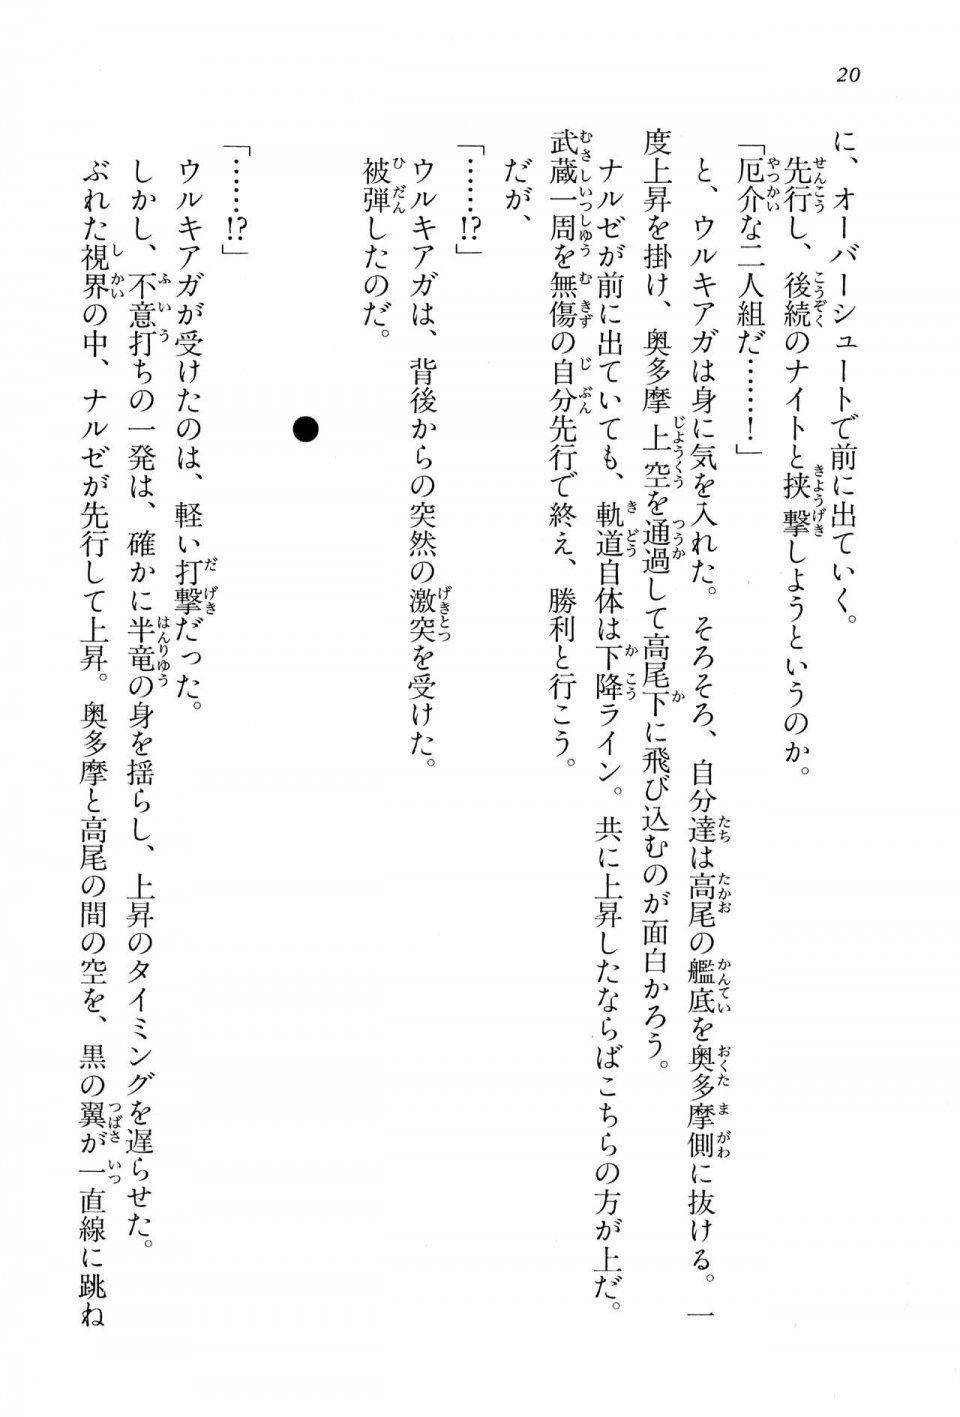 Kyoukai Senjou no Horizon BD Special Mininovel Vol 2(1B) - Photo #24